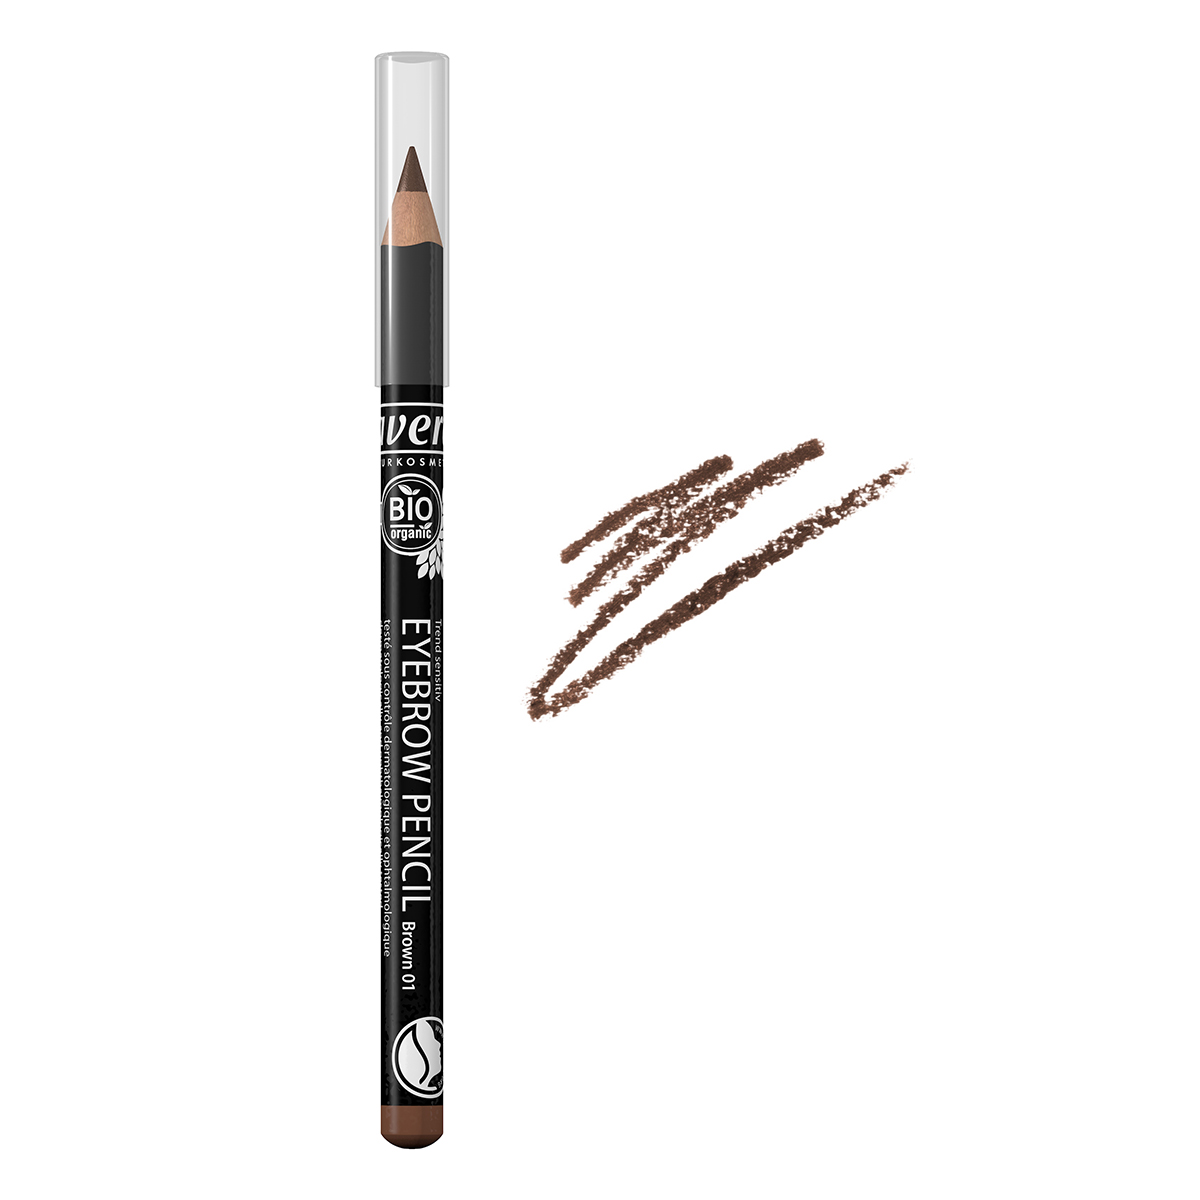 Lavera Organic Eyebrow Pencil - Brown 01 - 1.14g